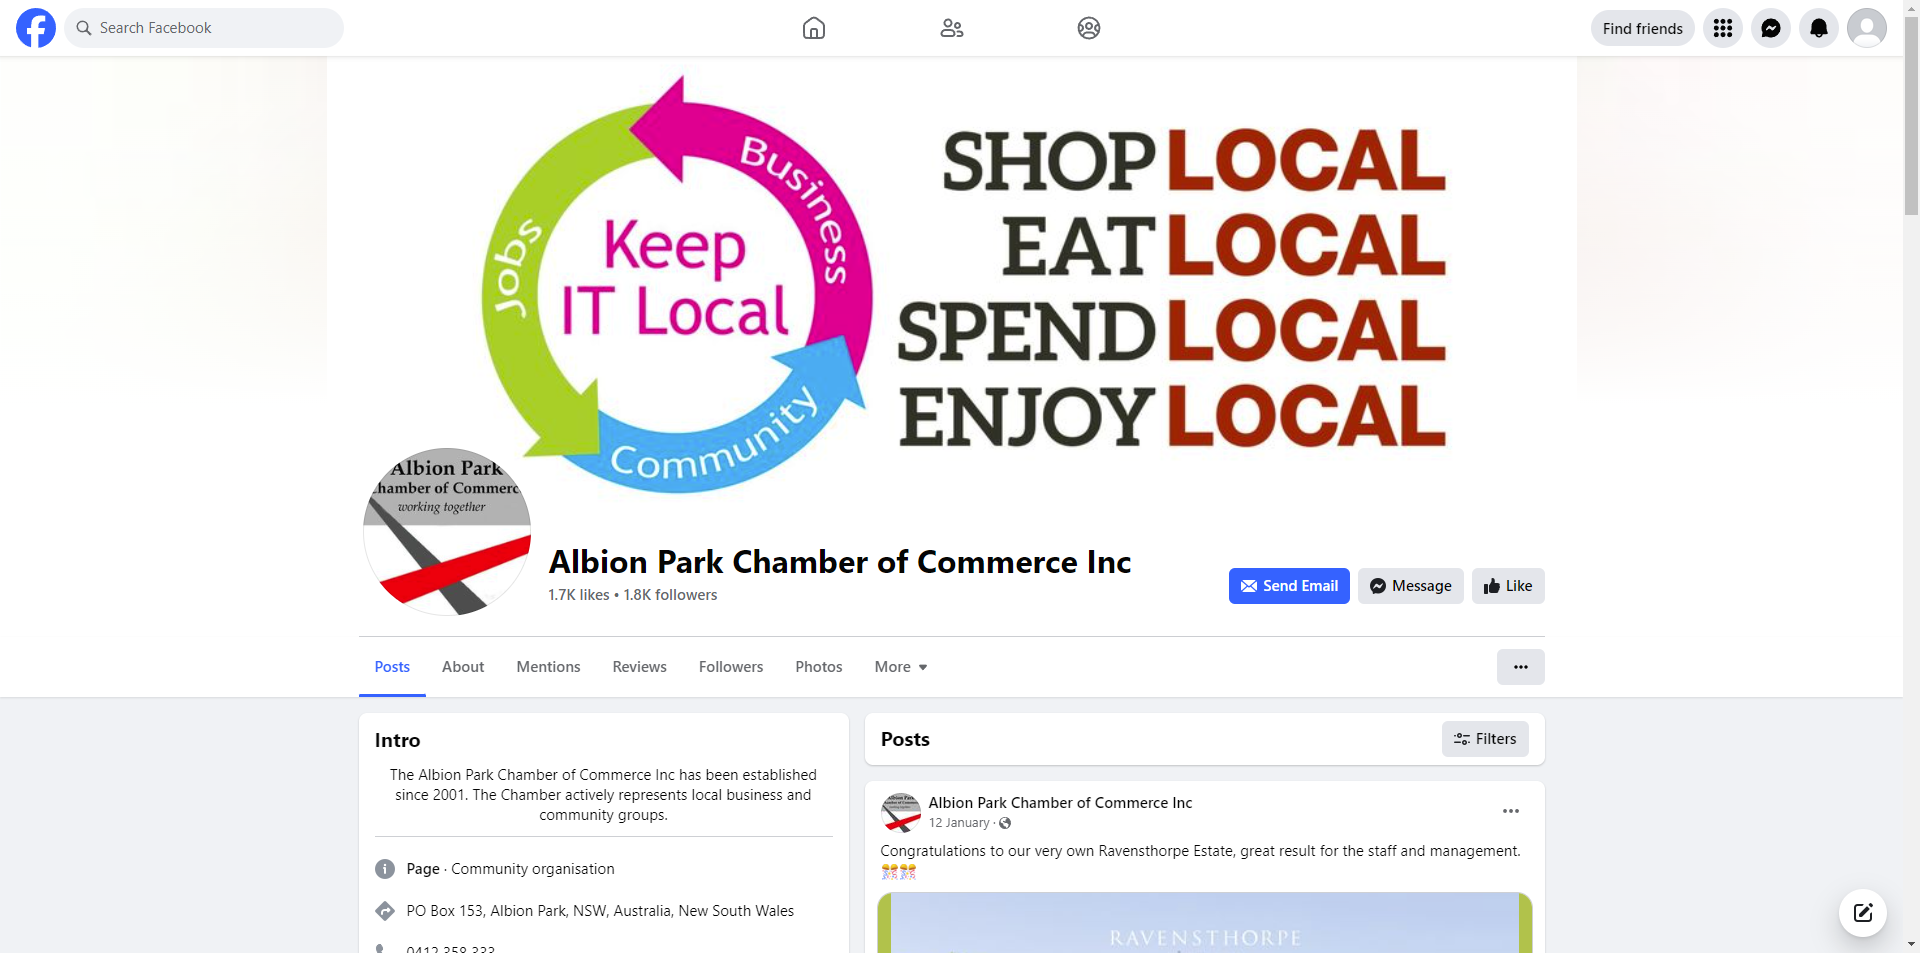 Albion Park Chamber of Commerce